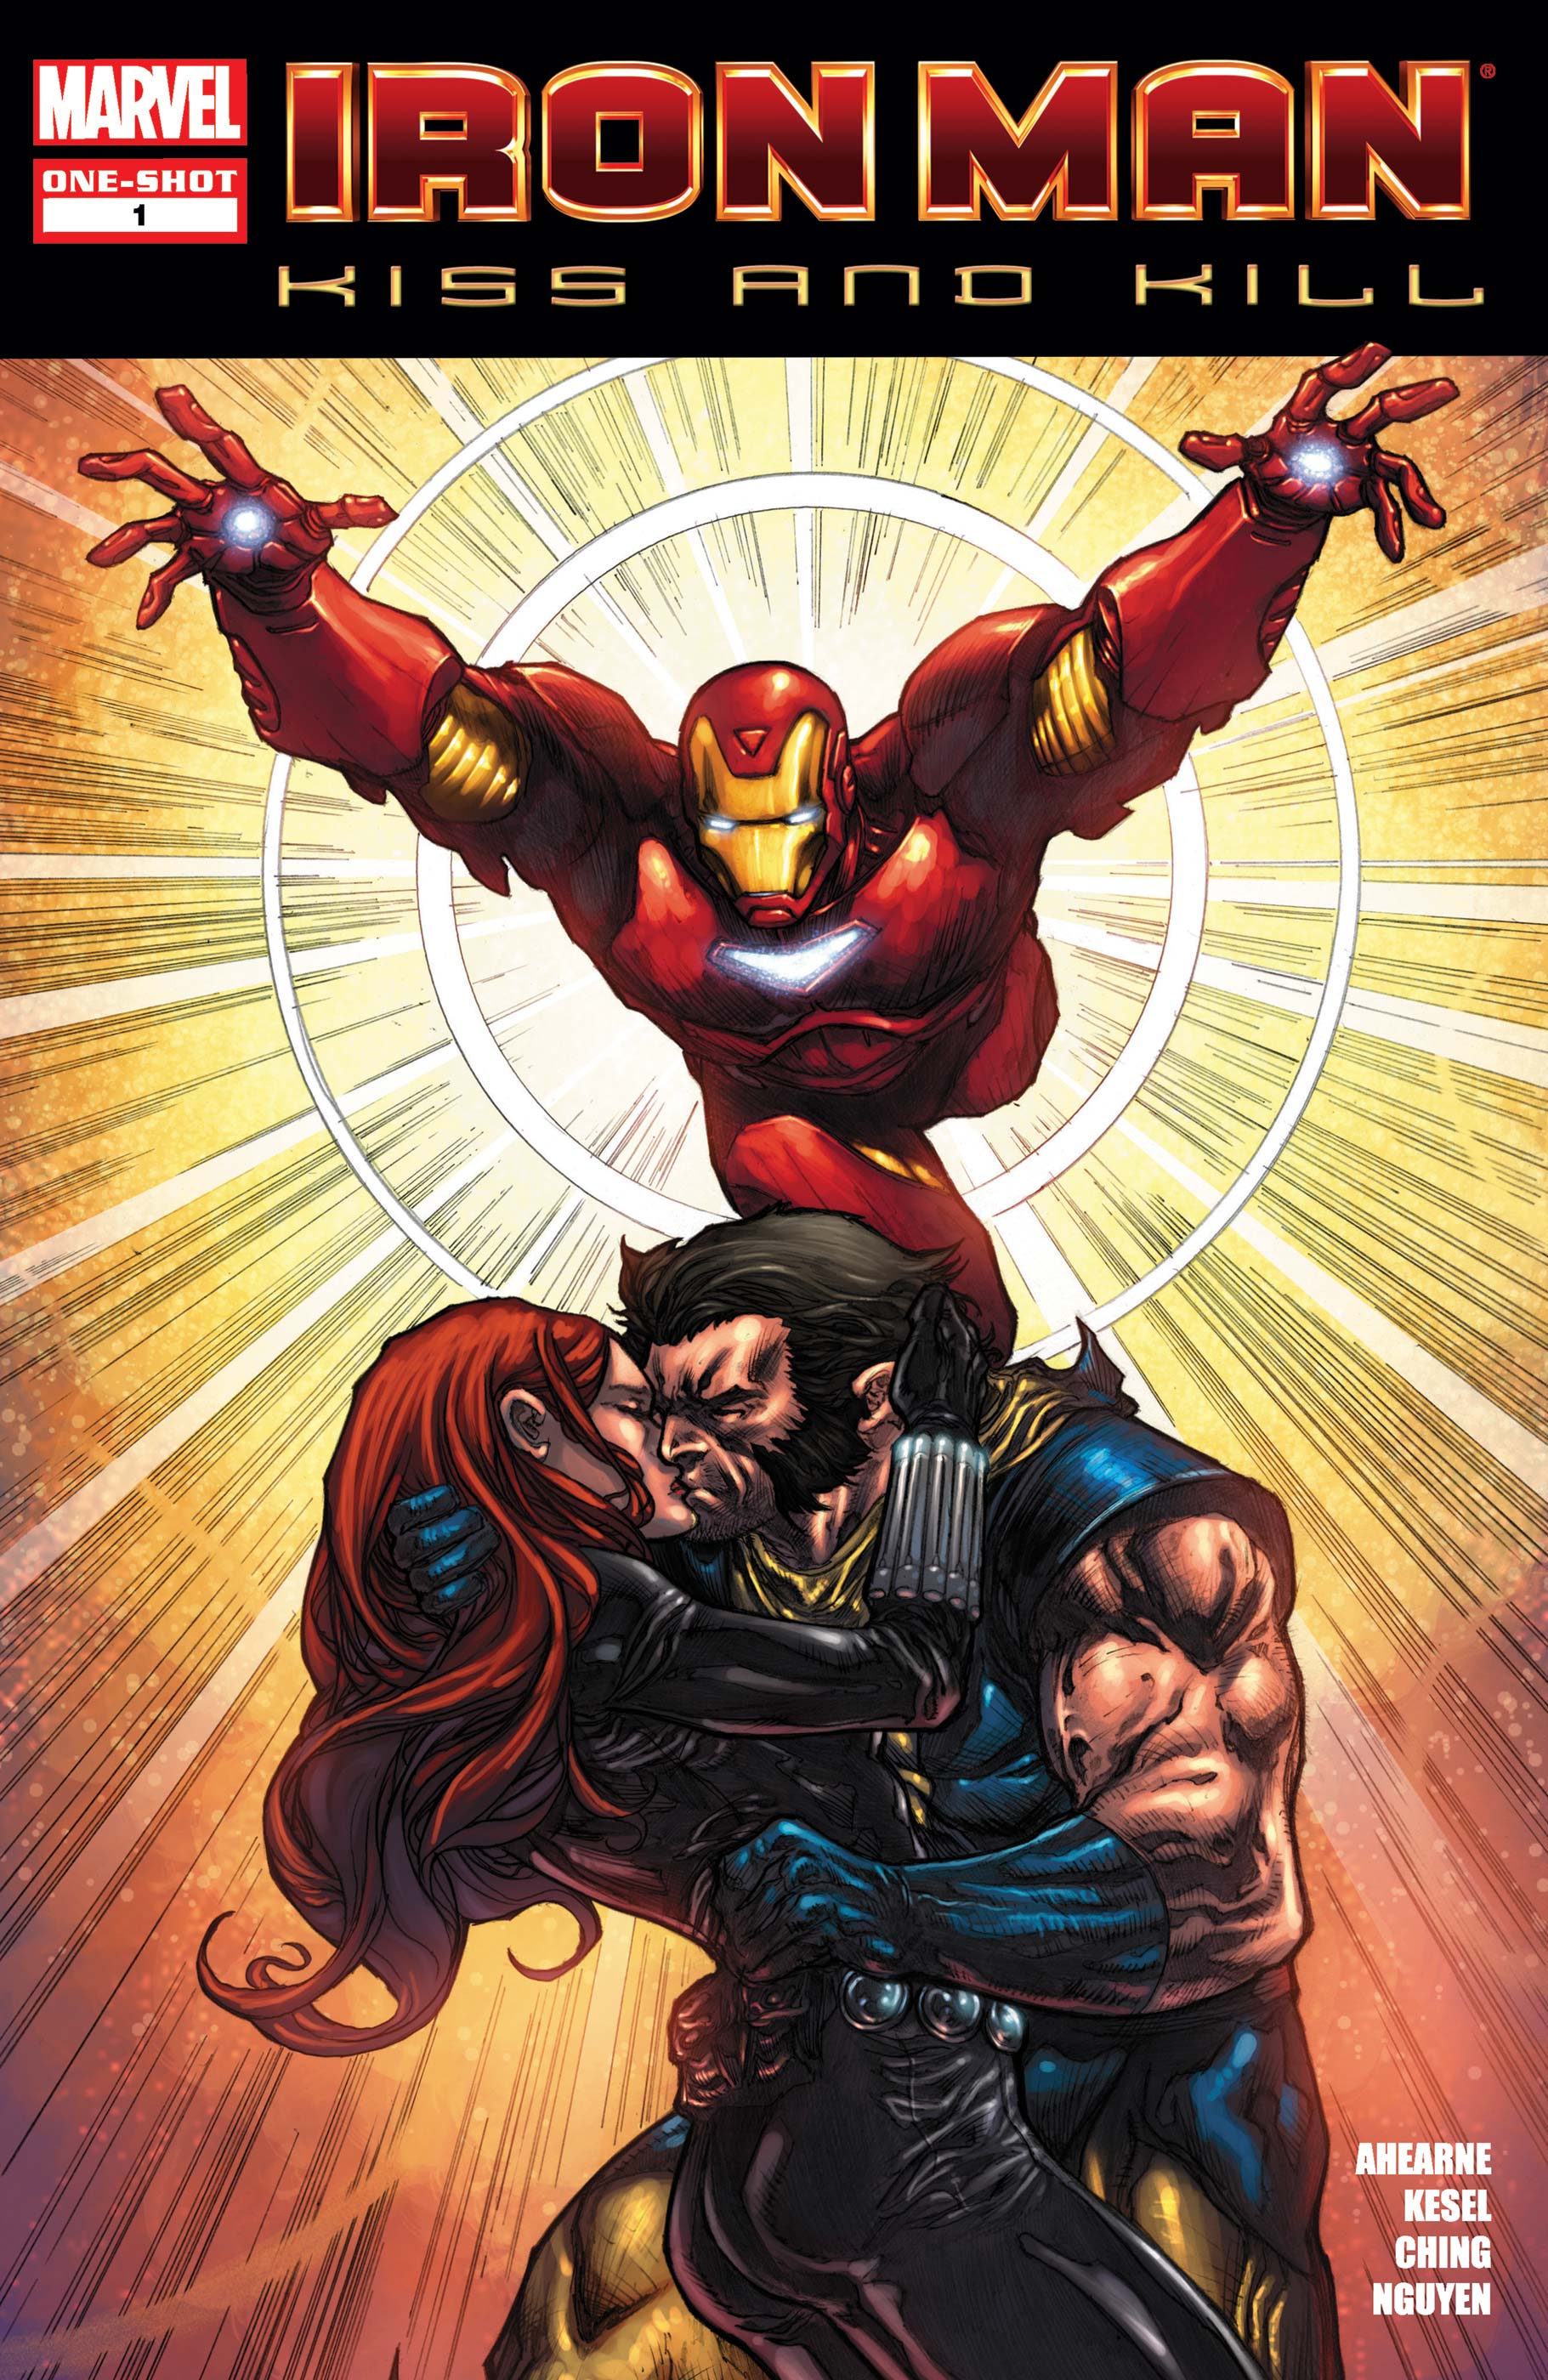 Iron Man: Kiss and Kill (2010) #1